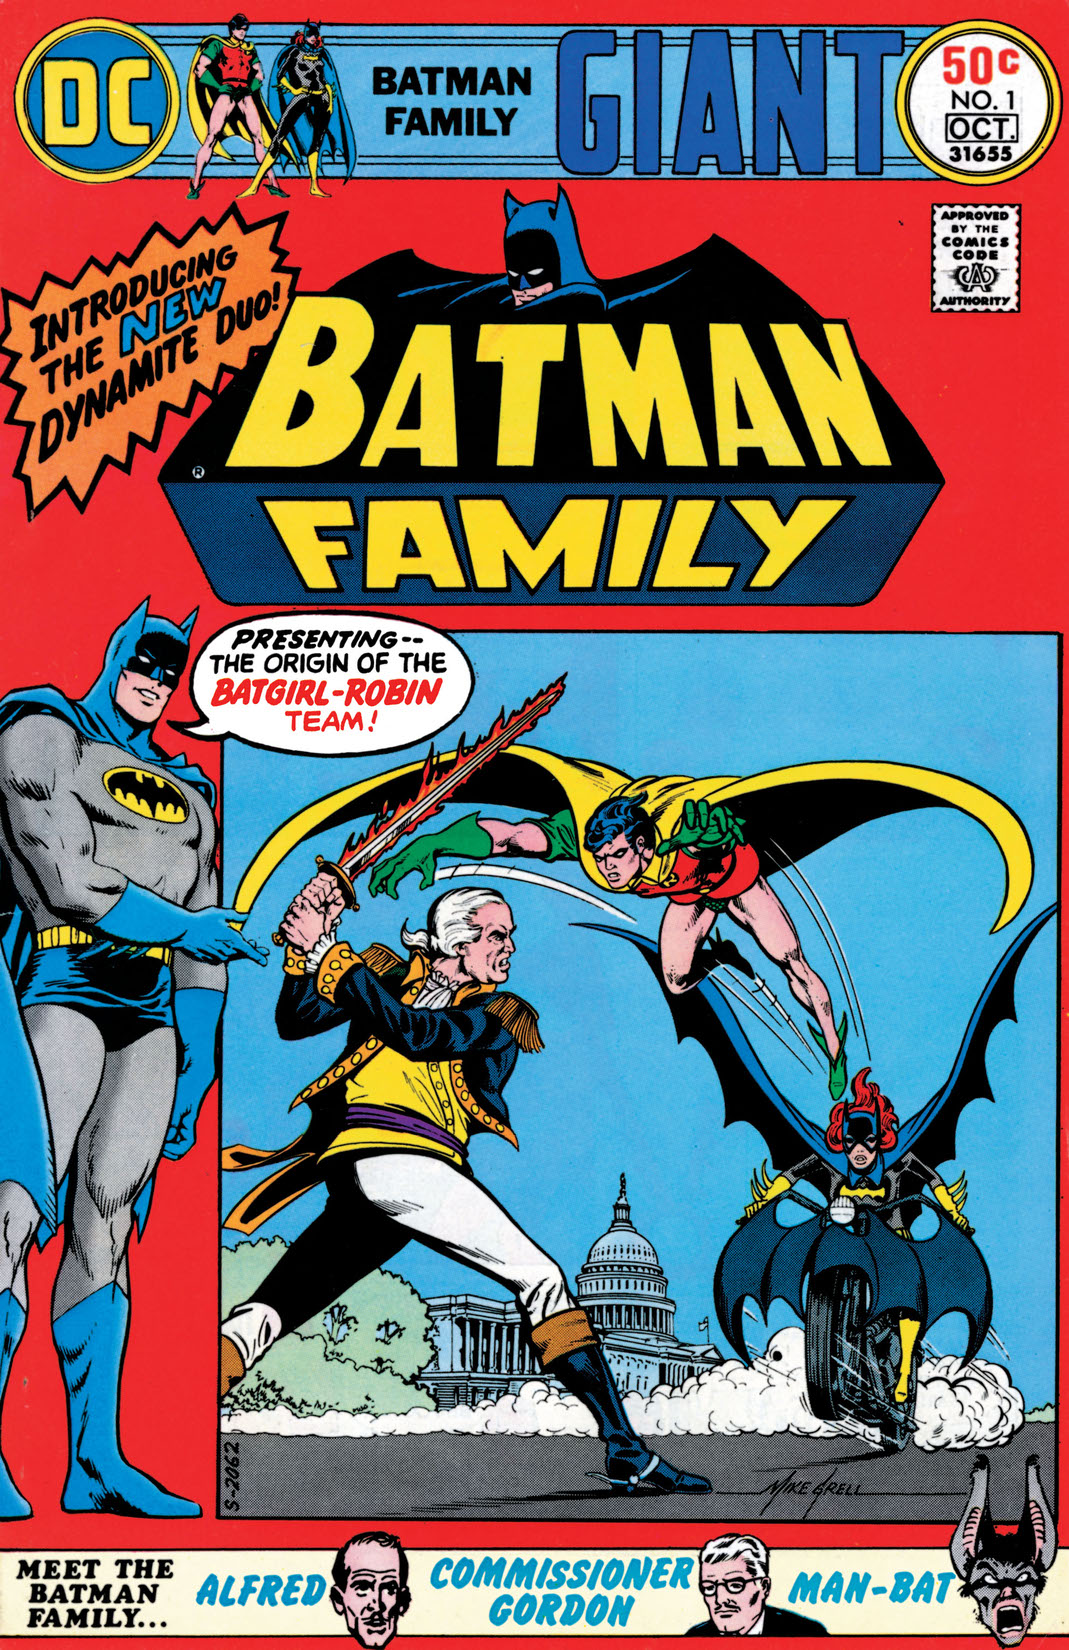 Batman Family #1 preview images